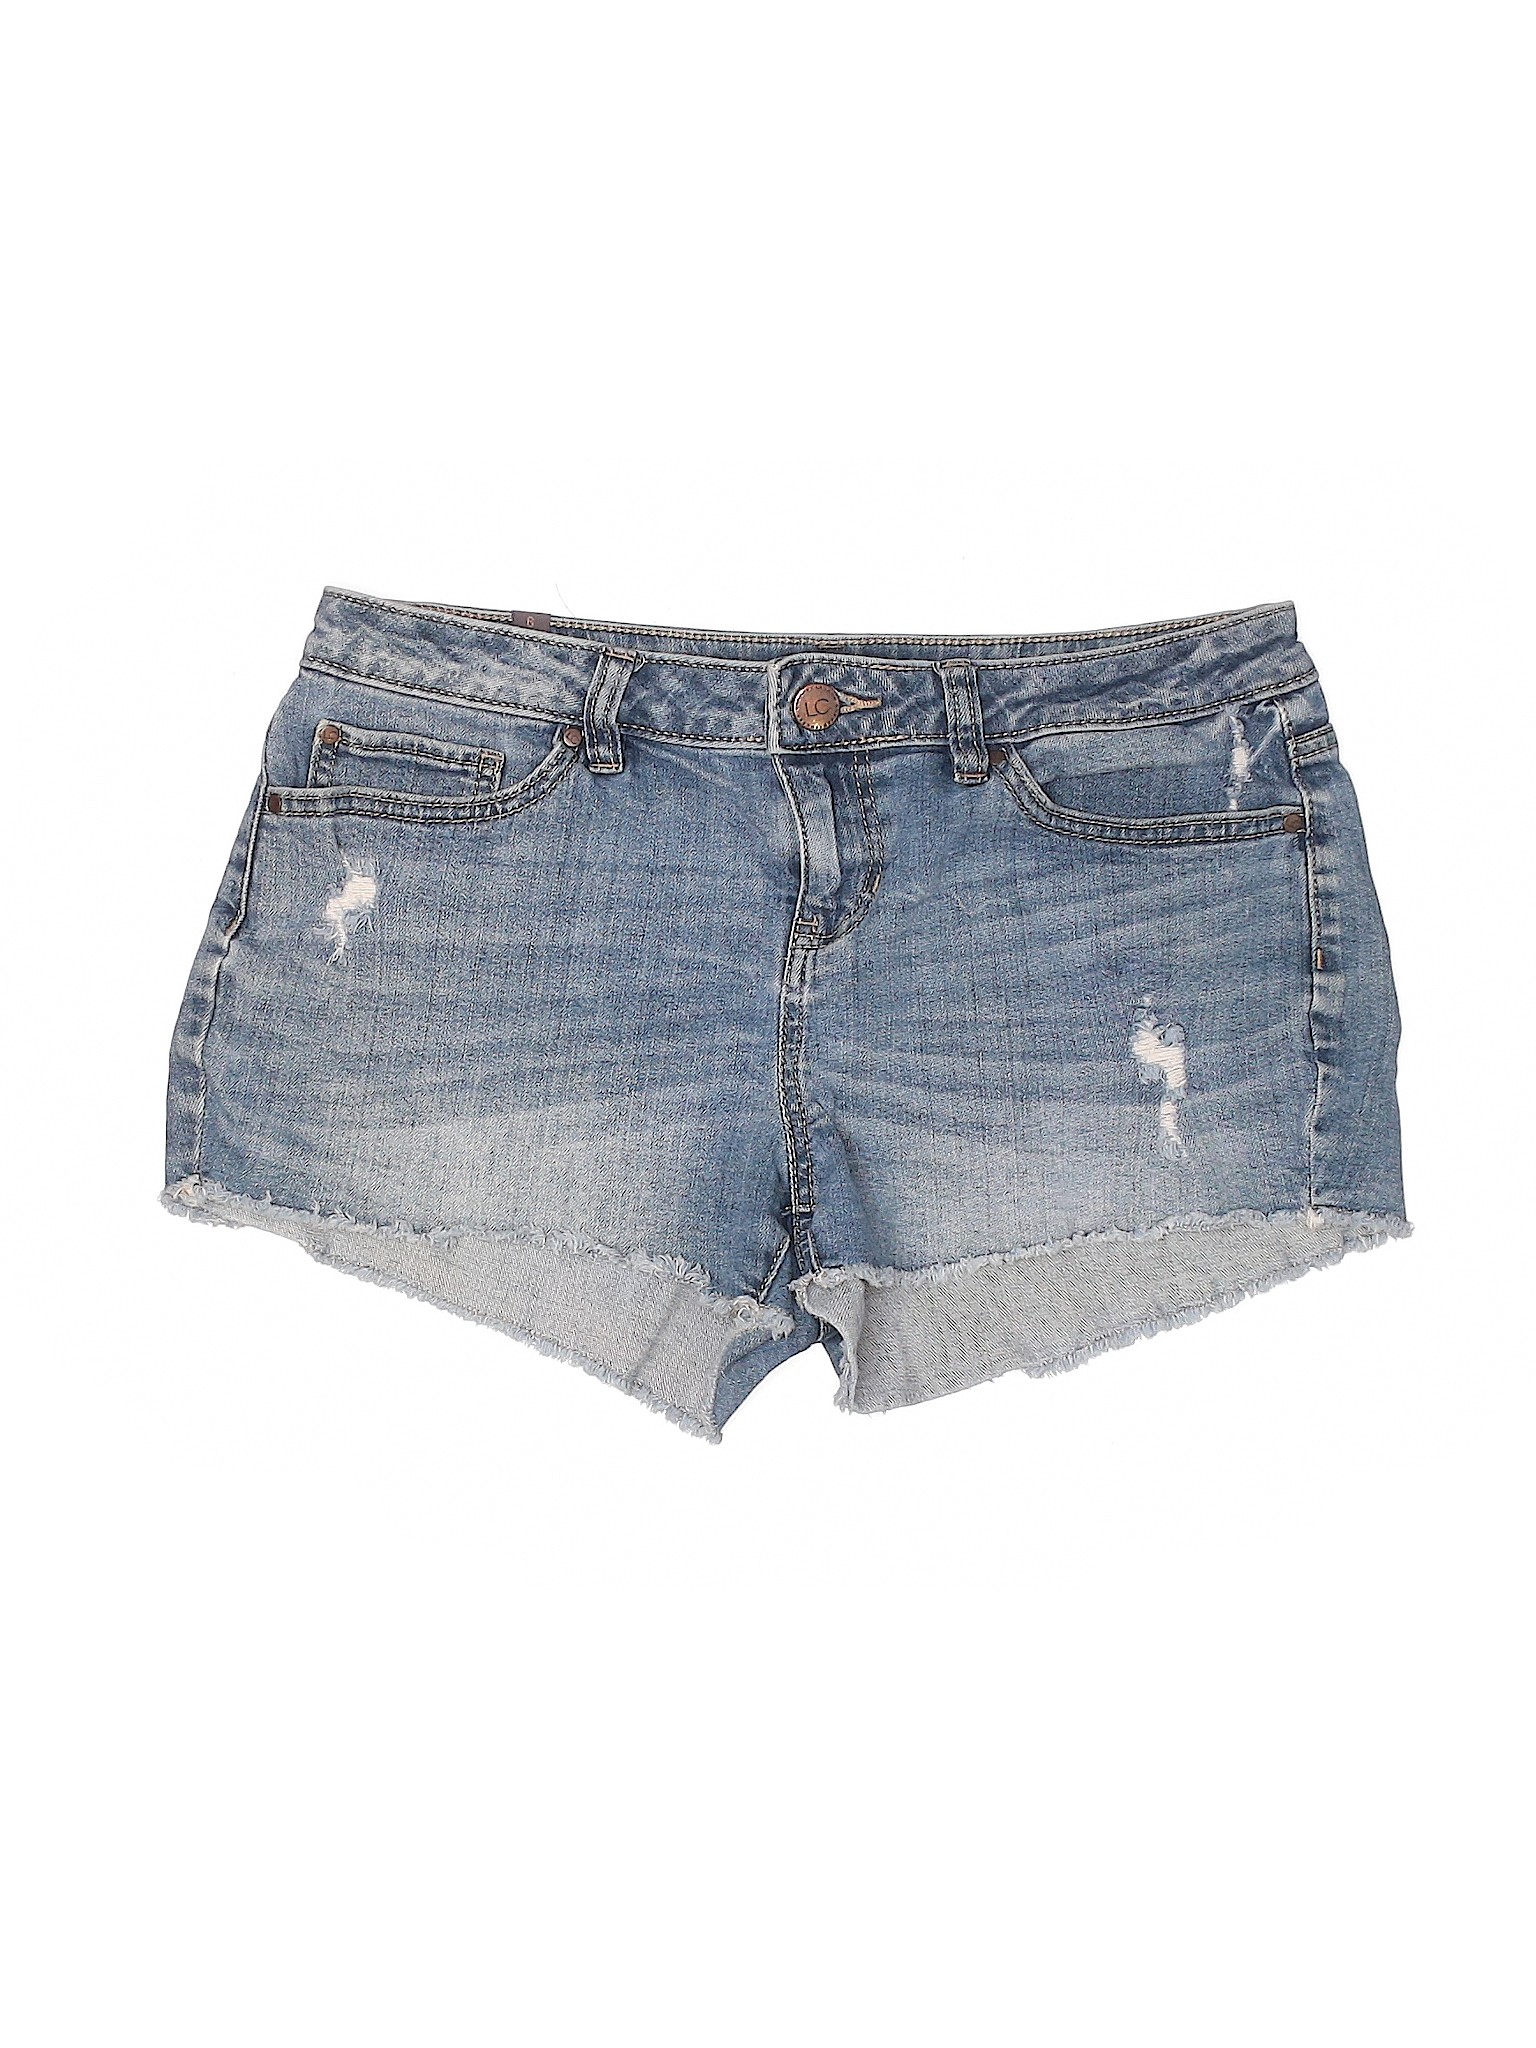 lauren conrad jean shorts